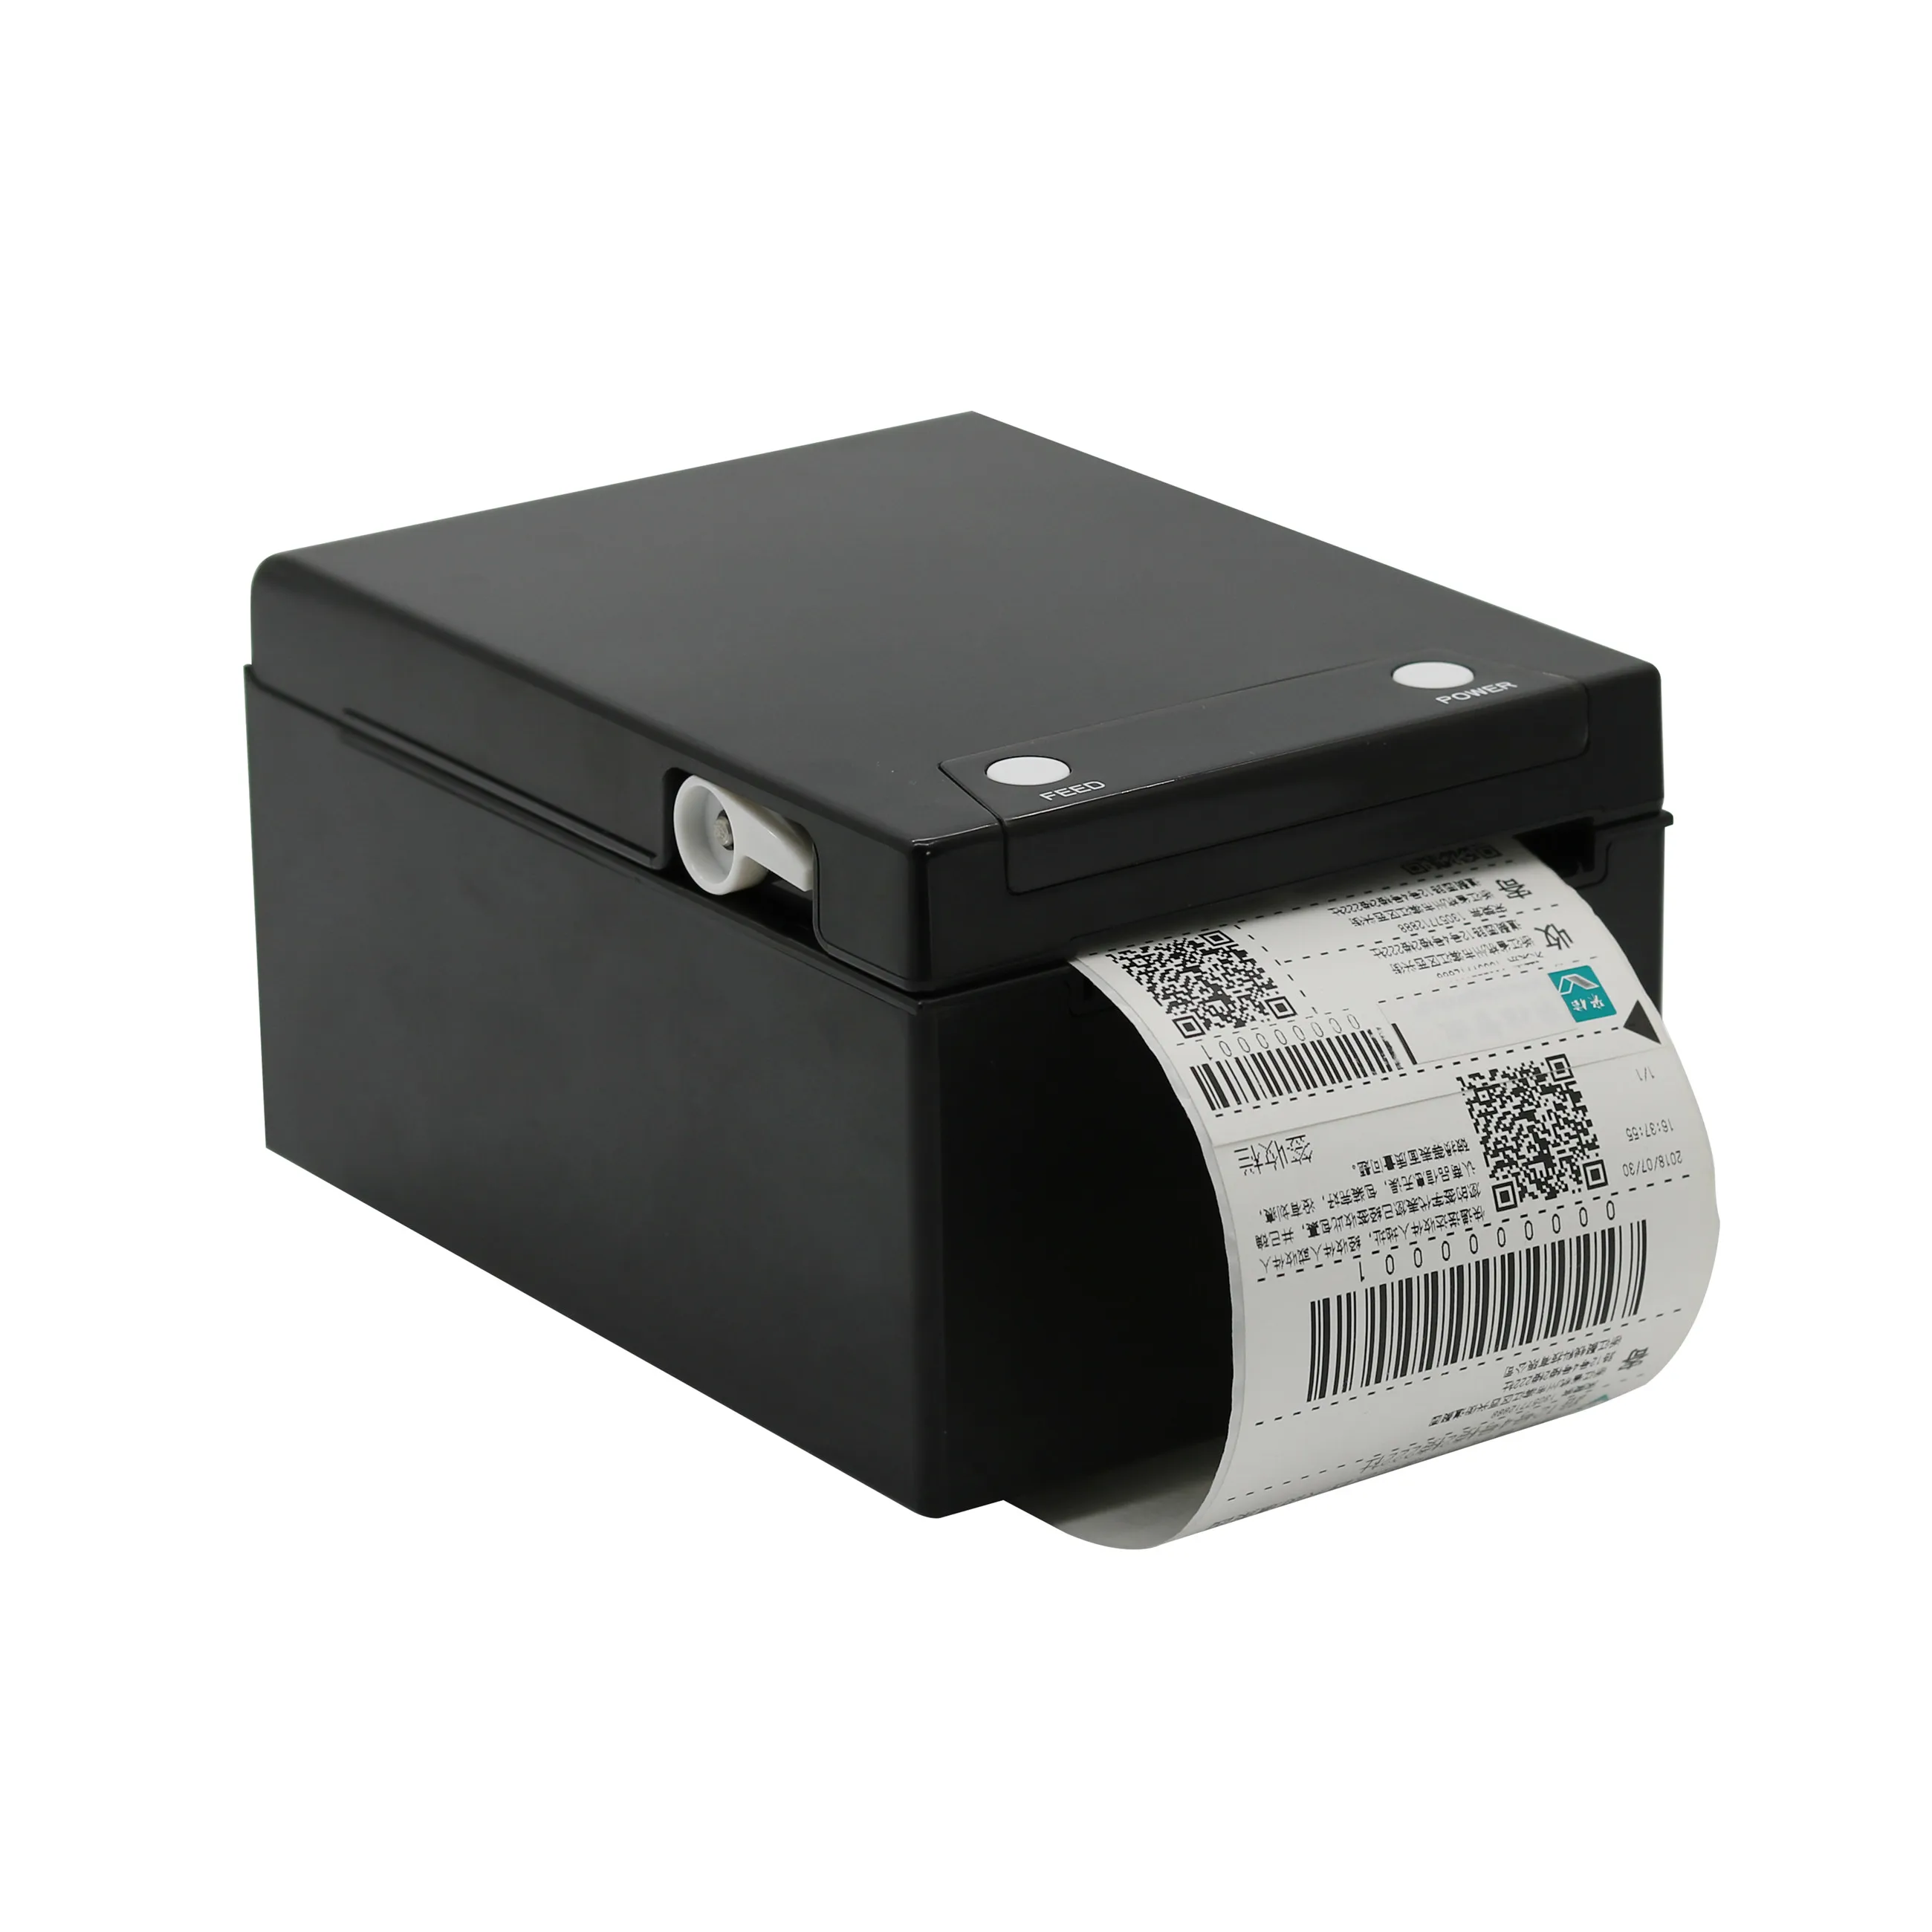 Caysn 80mm Bluetooth Thermal Label Printer 3inch 4x6 Wireless Shipping Label Printer Buy 4704